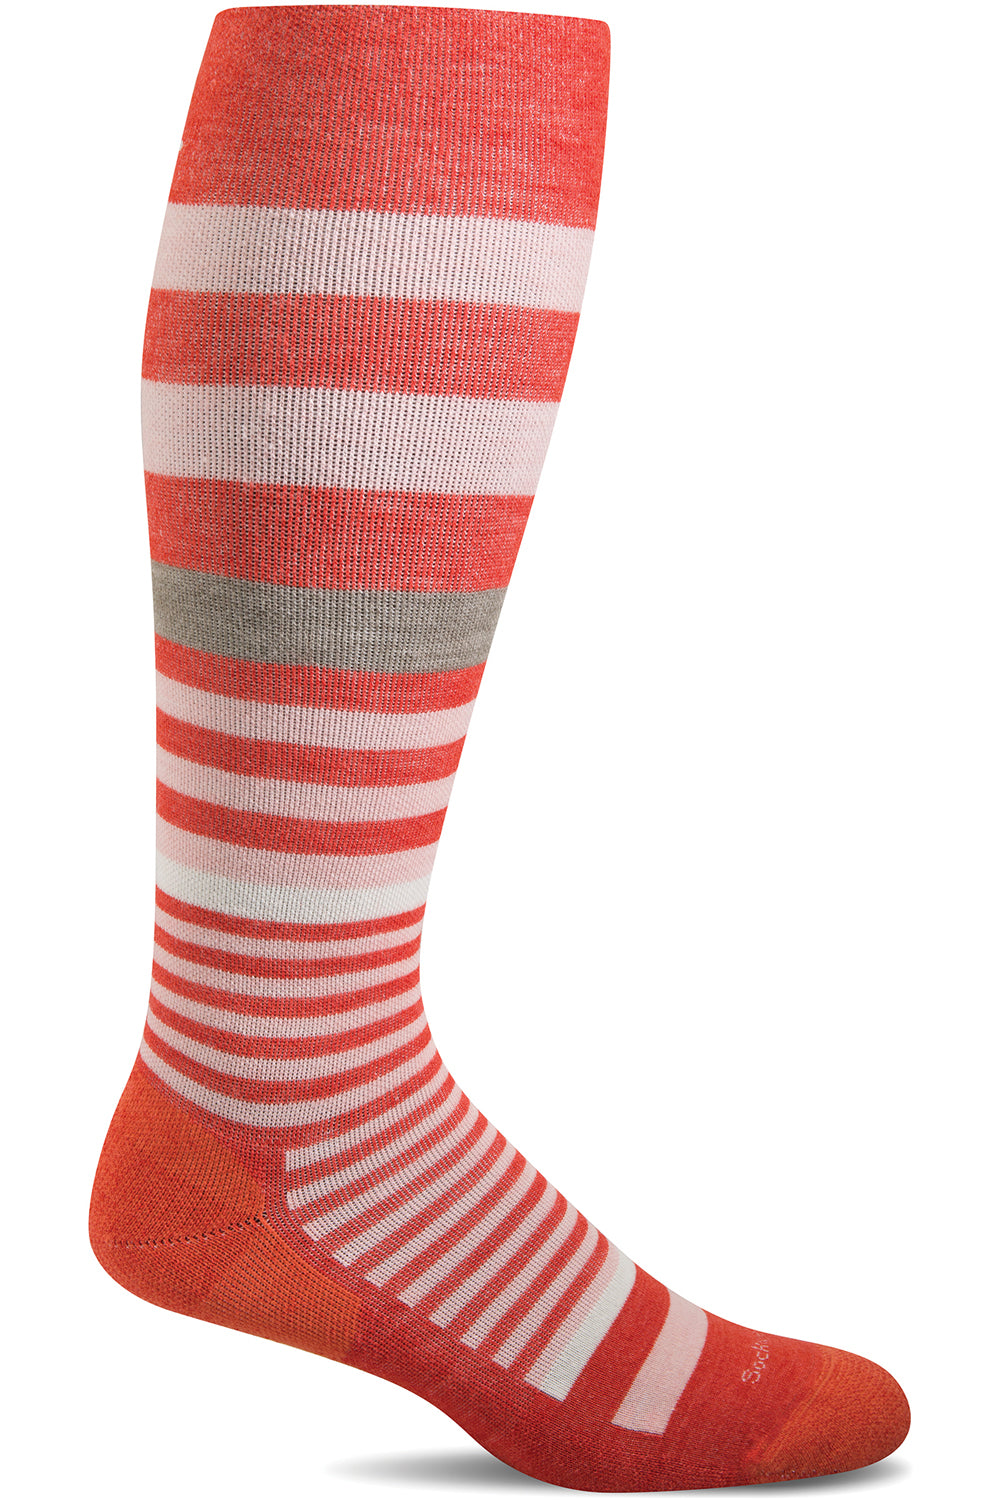 Sockwell Women's Orbital Stripe Sock in Poppy color from the side